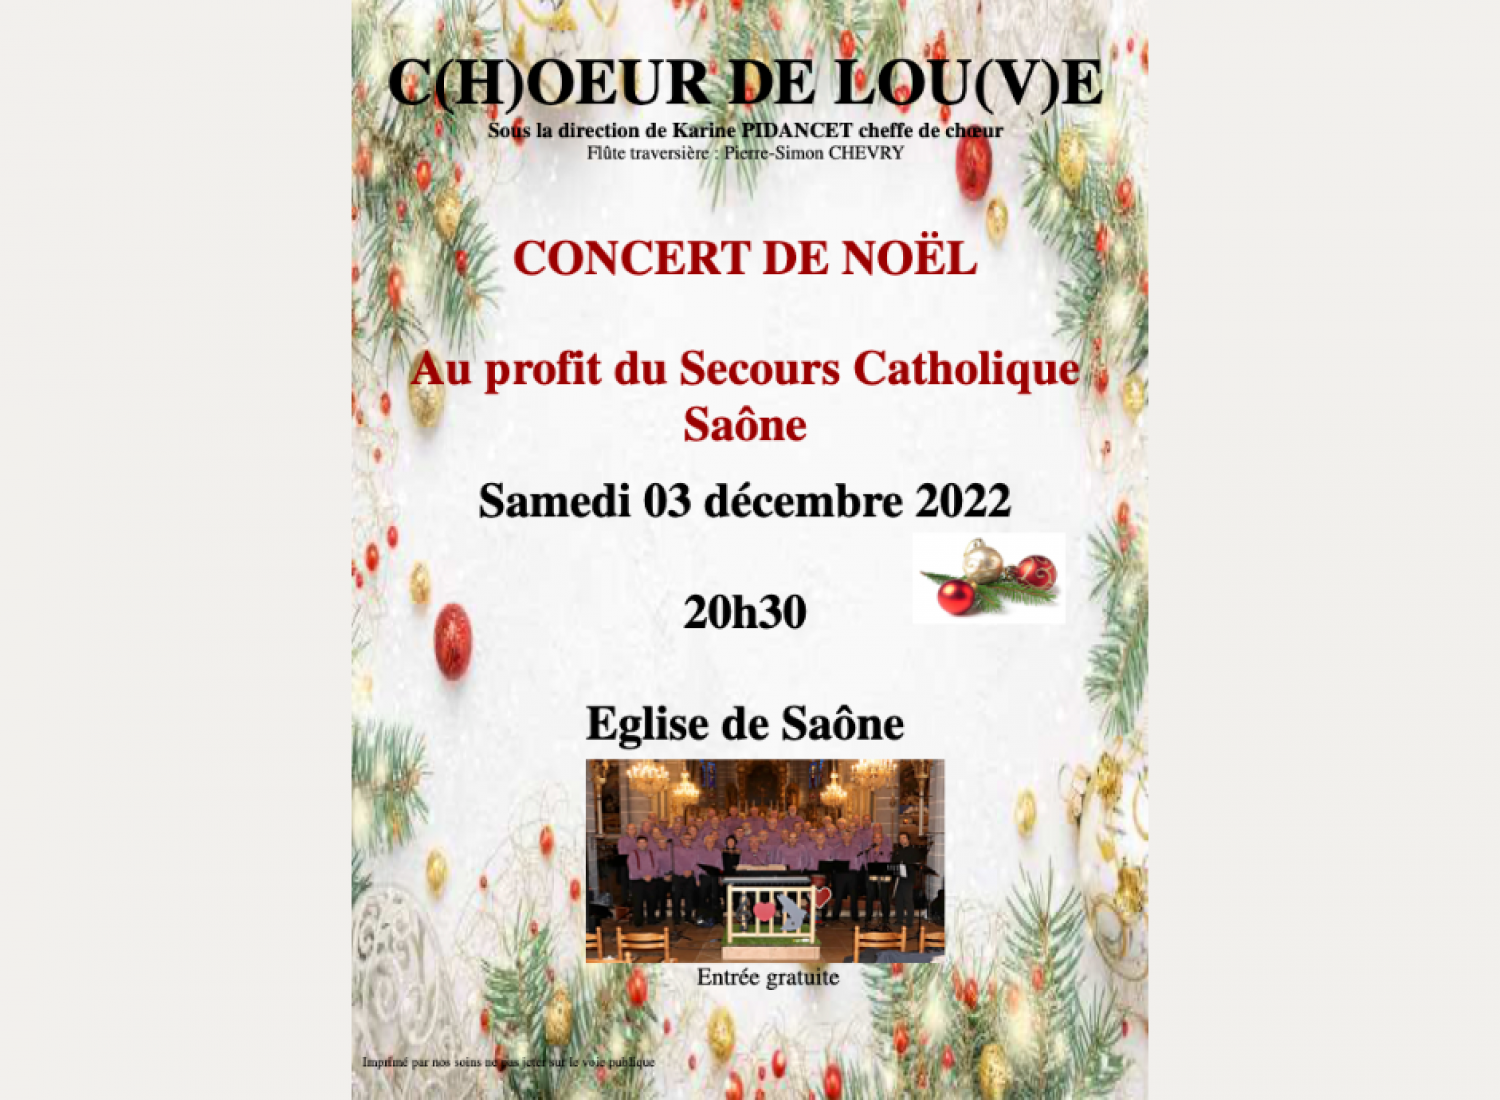 Concert de Noël - Coeur de lou(v)e - Saône